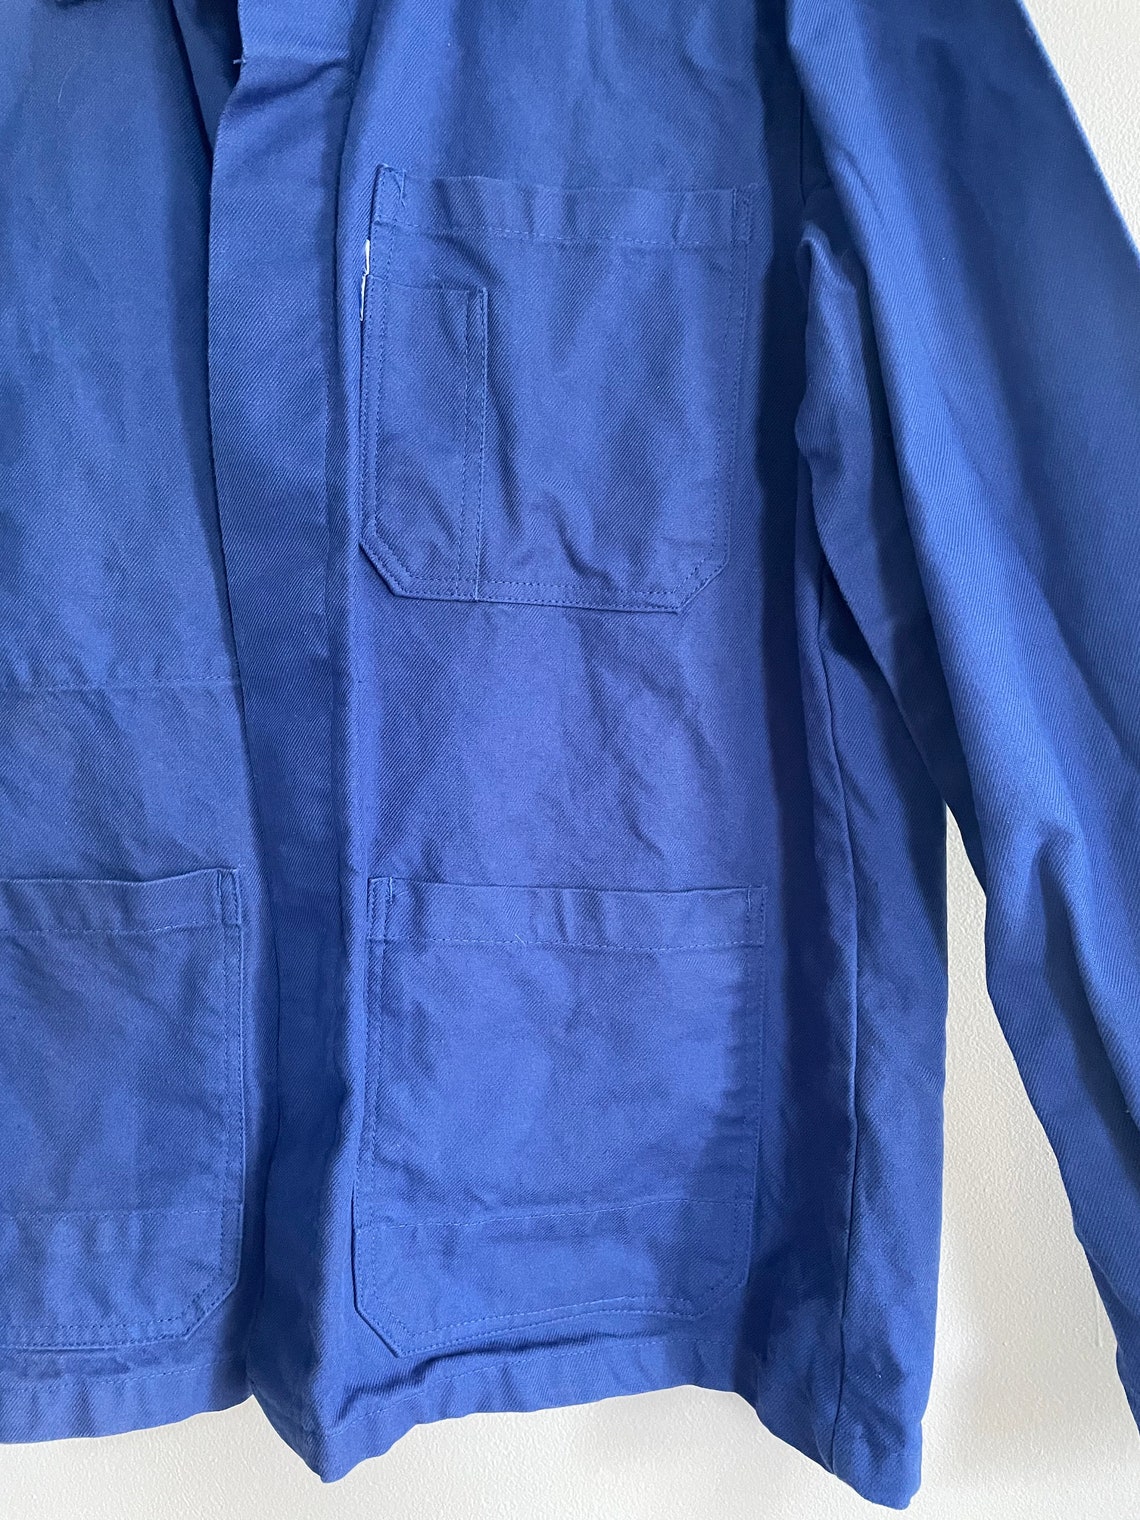 French Blue Work Wear Jacket Chore Coat Bleu de Travail L XL | Etsy